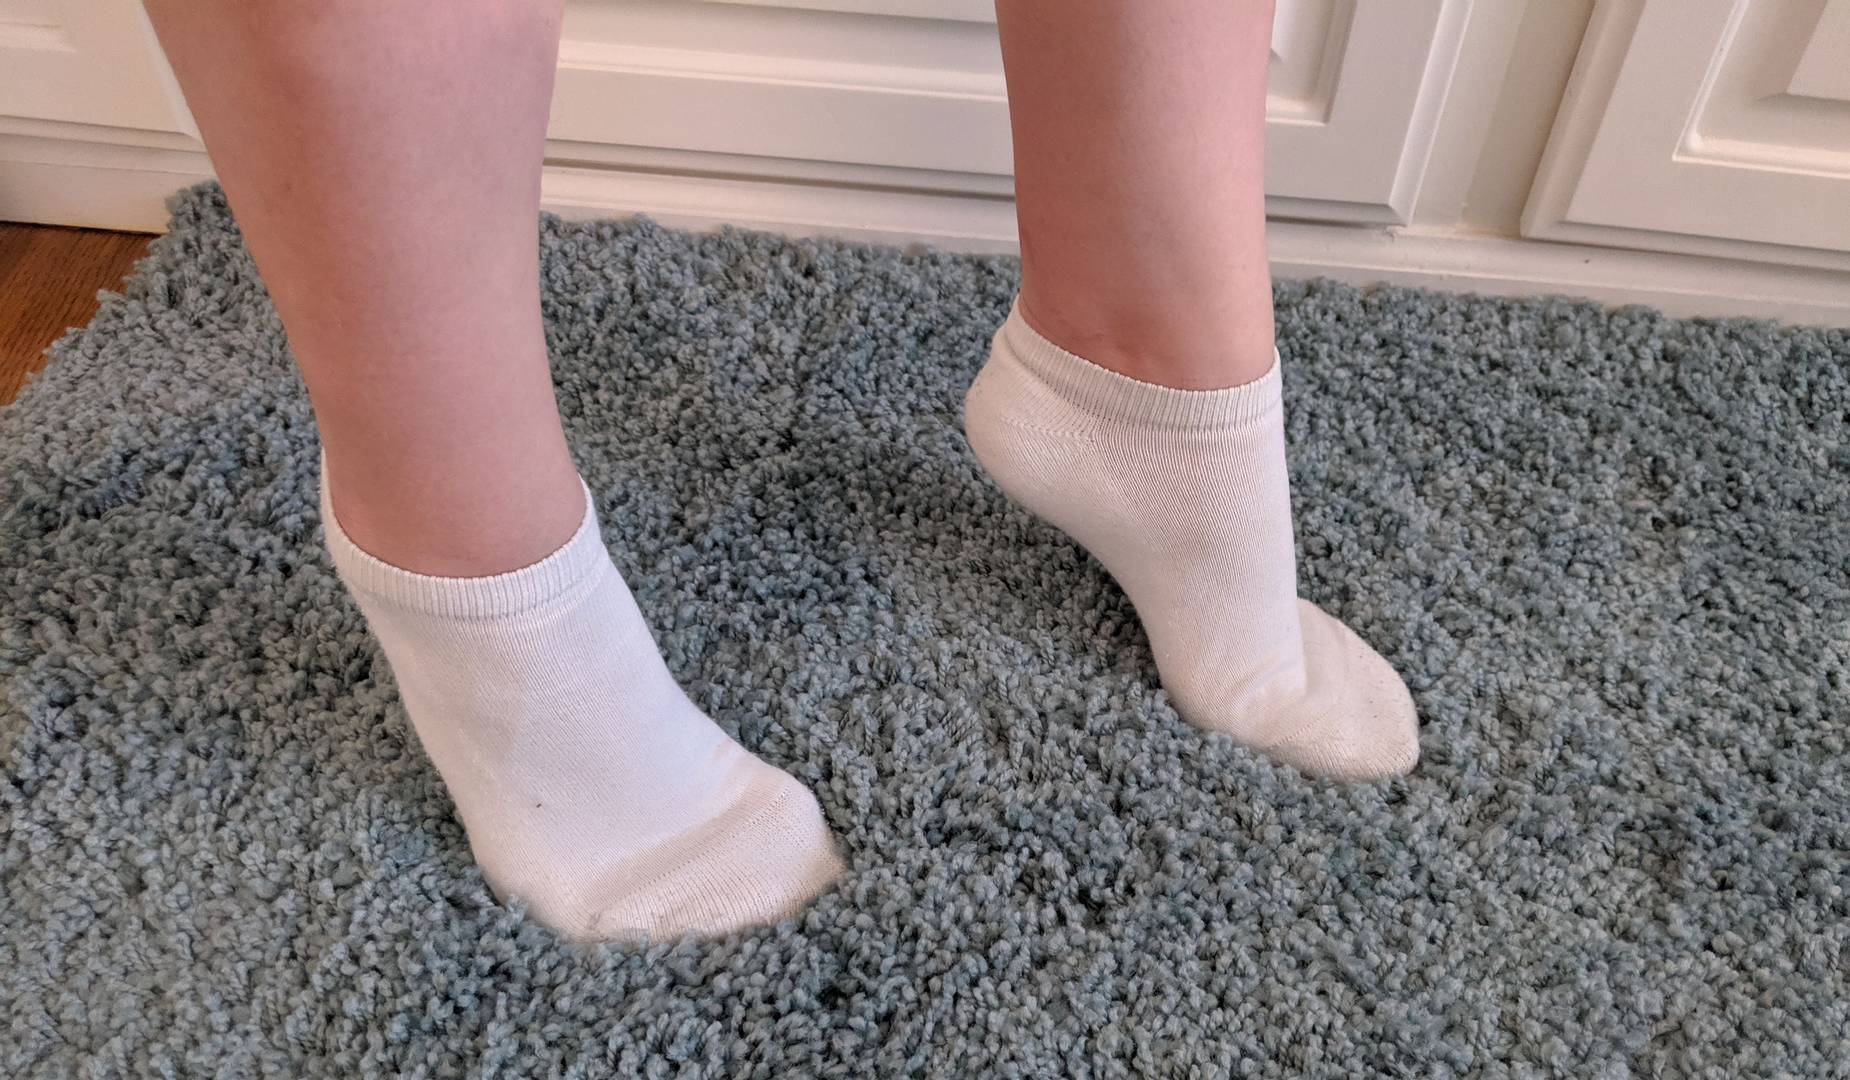 Три на носочки. Ходить на носочках. Ходьба на носочках. Дети в носочках. Ходить в носках.